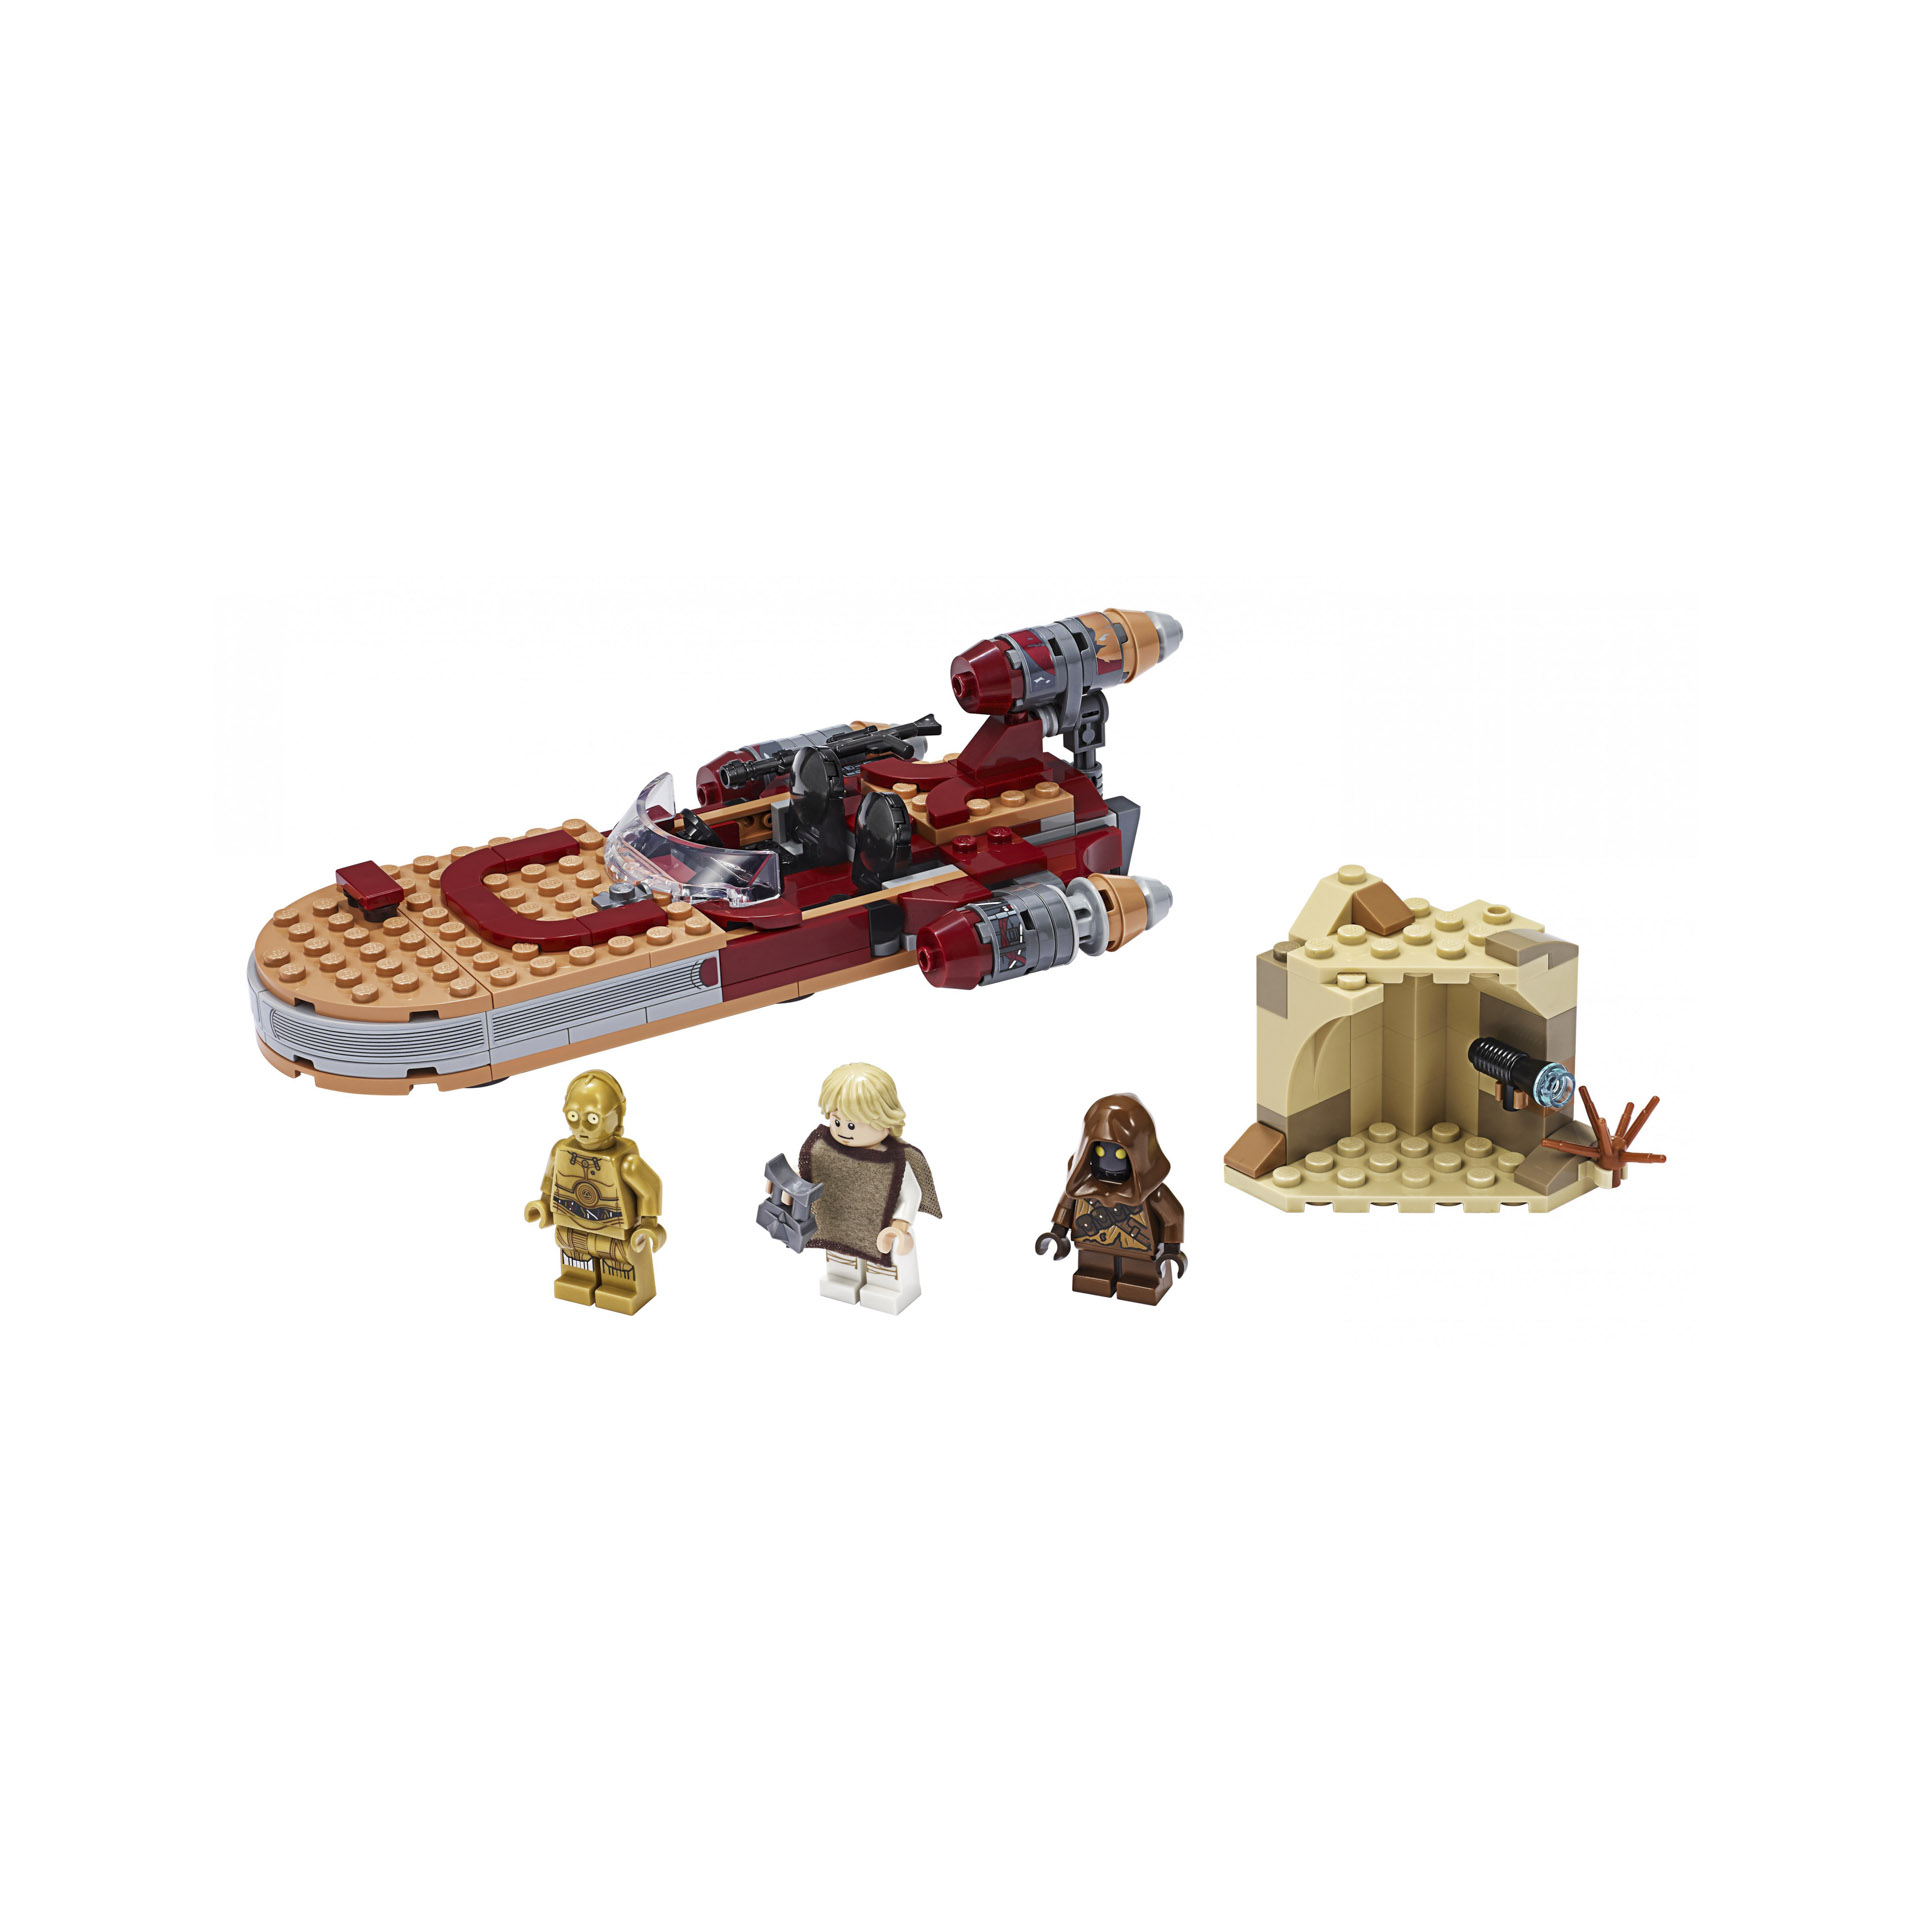 LEGO Star Wars 75271 Landspeeder di Luke Skywalker 75271, , large